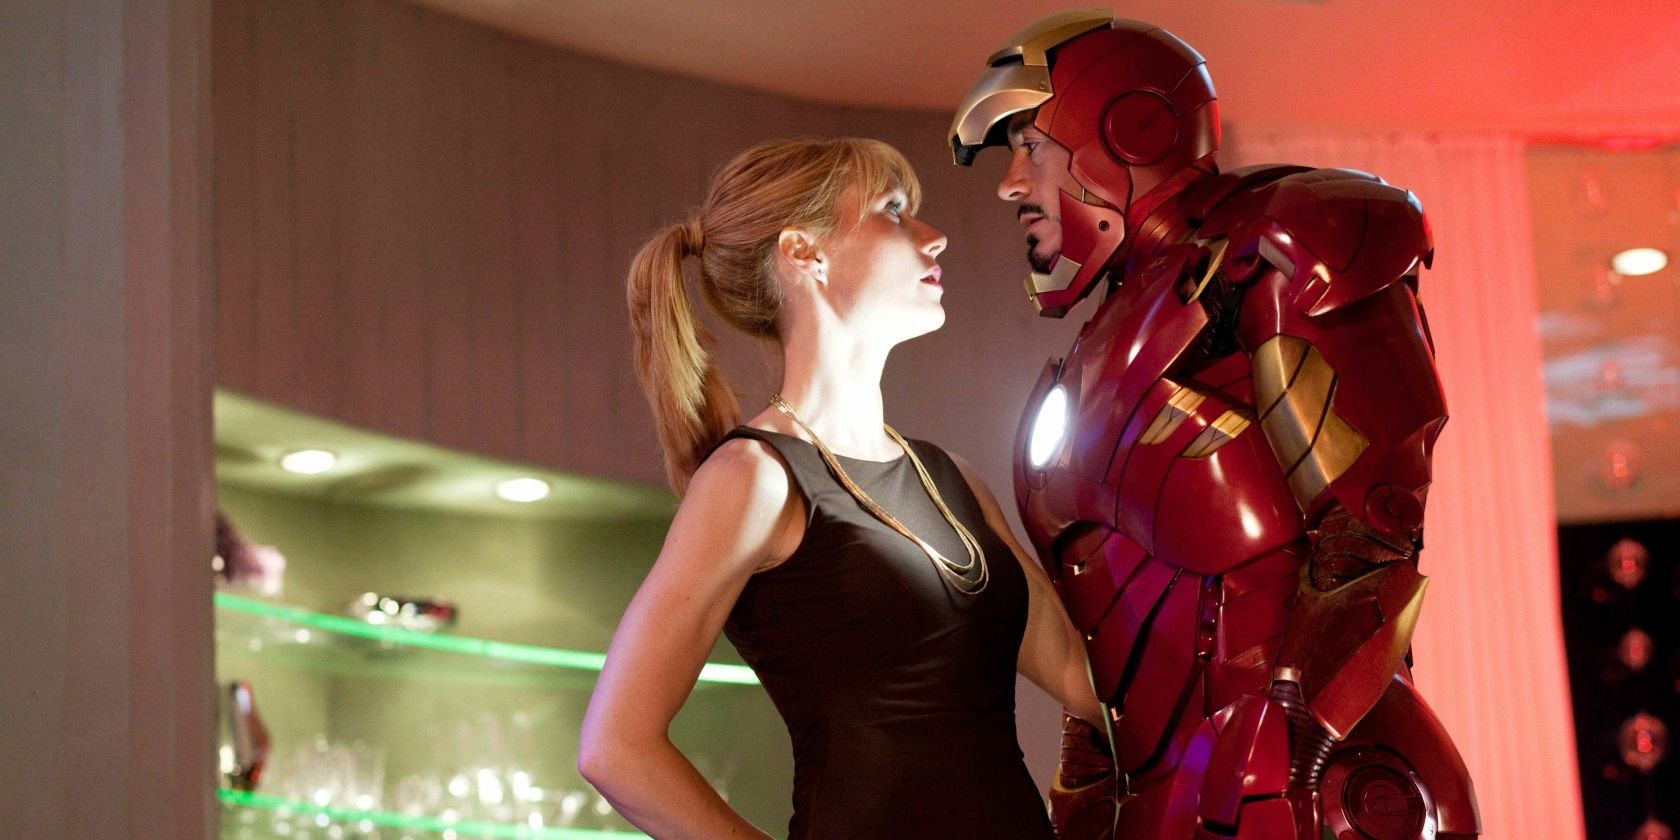 15 Inspiring Quotes From Tony Stark